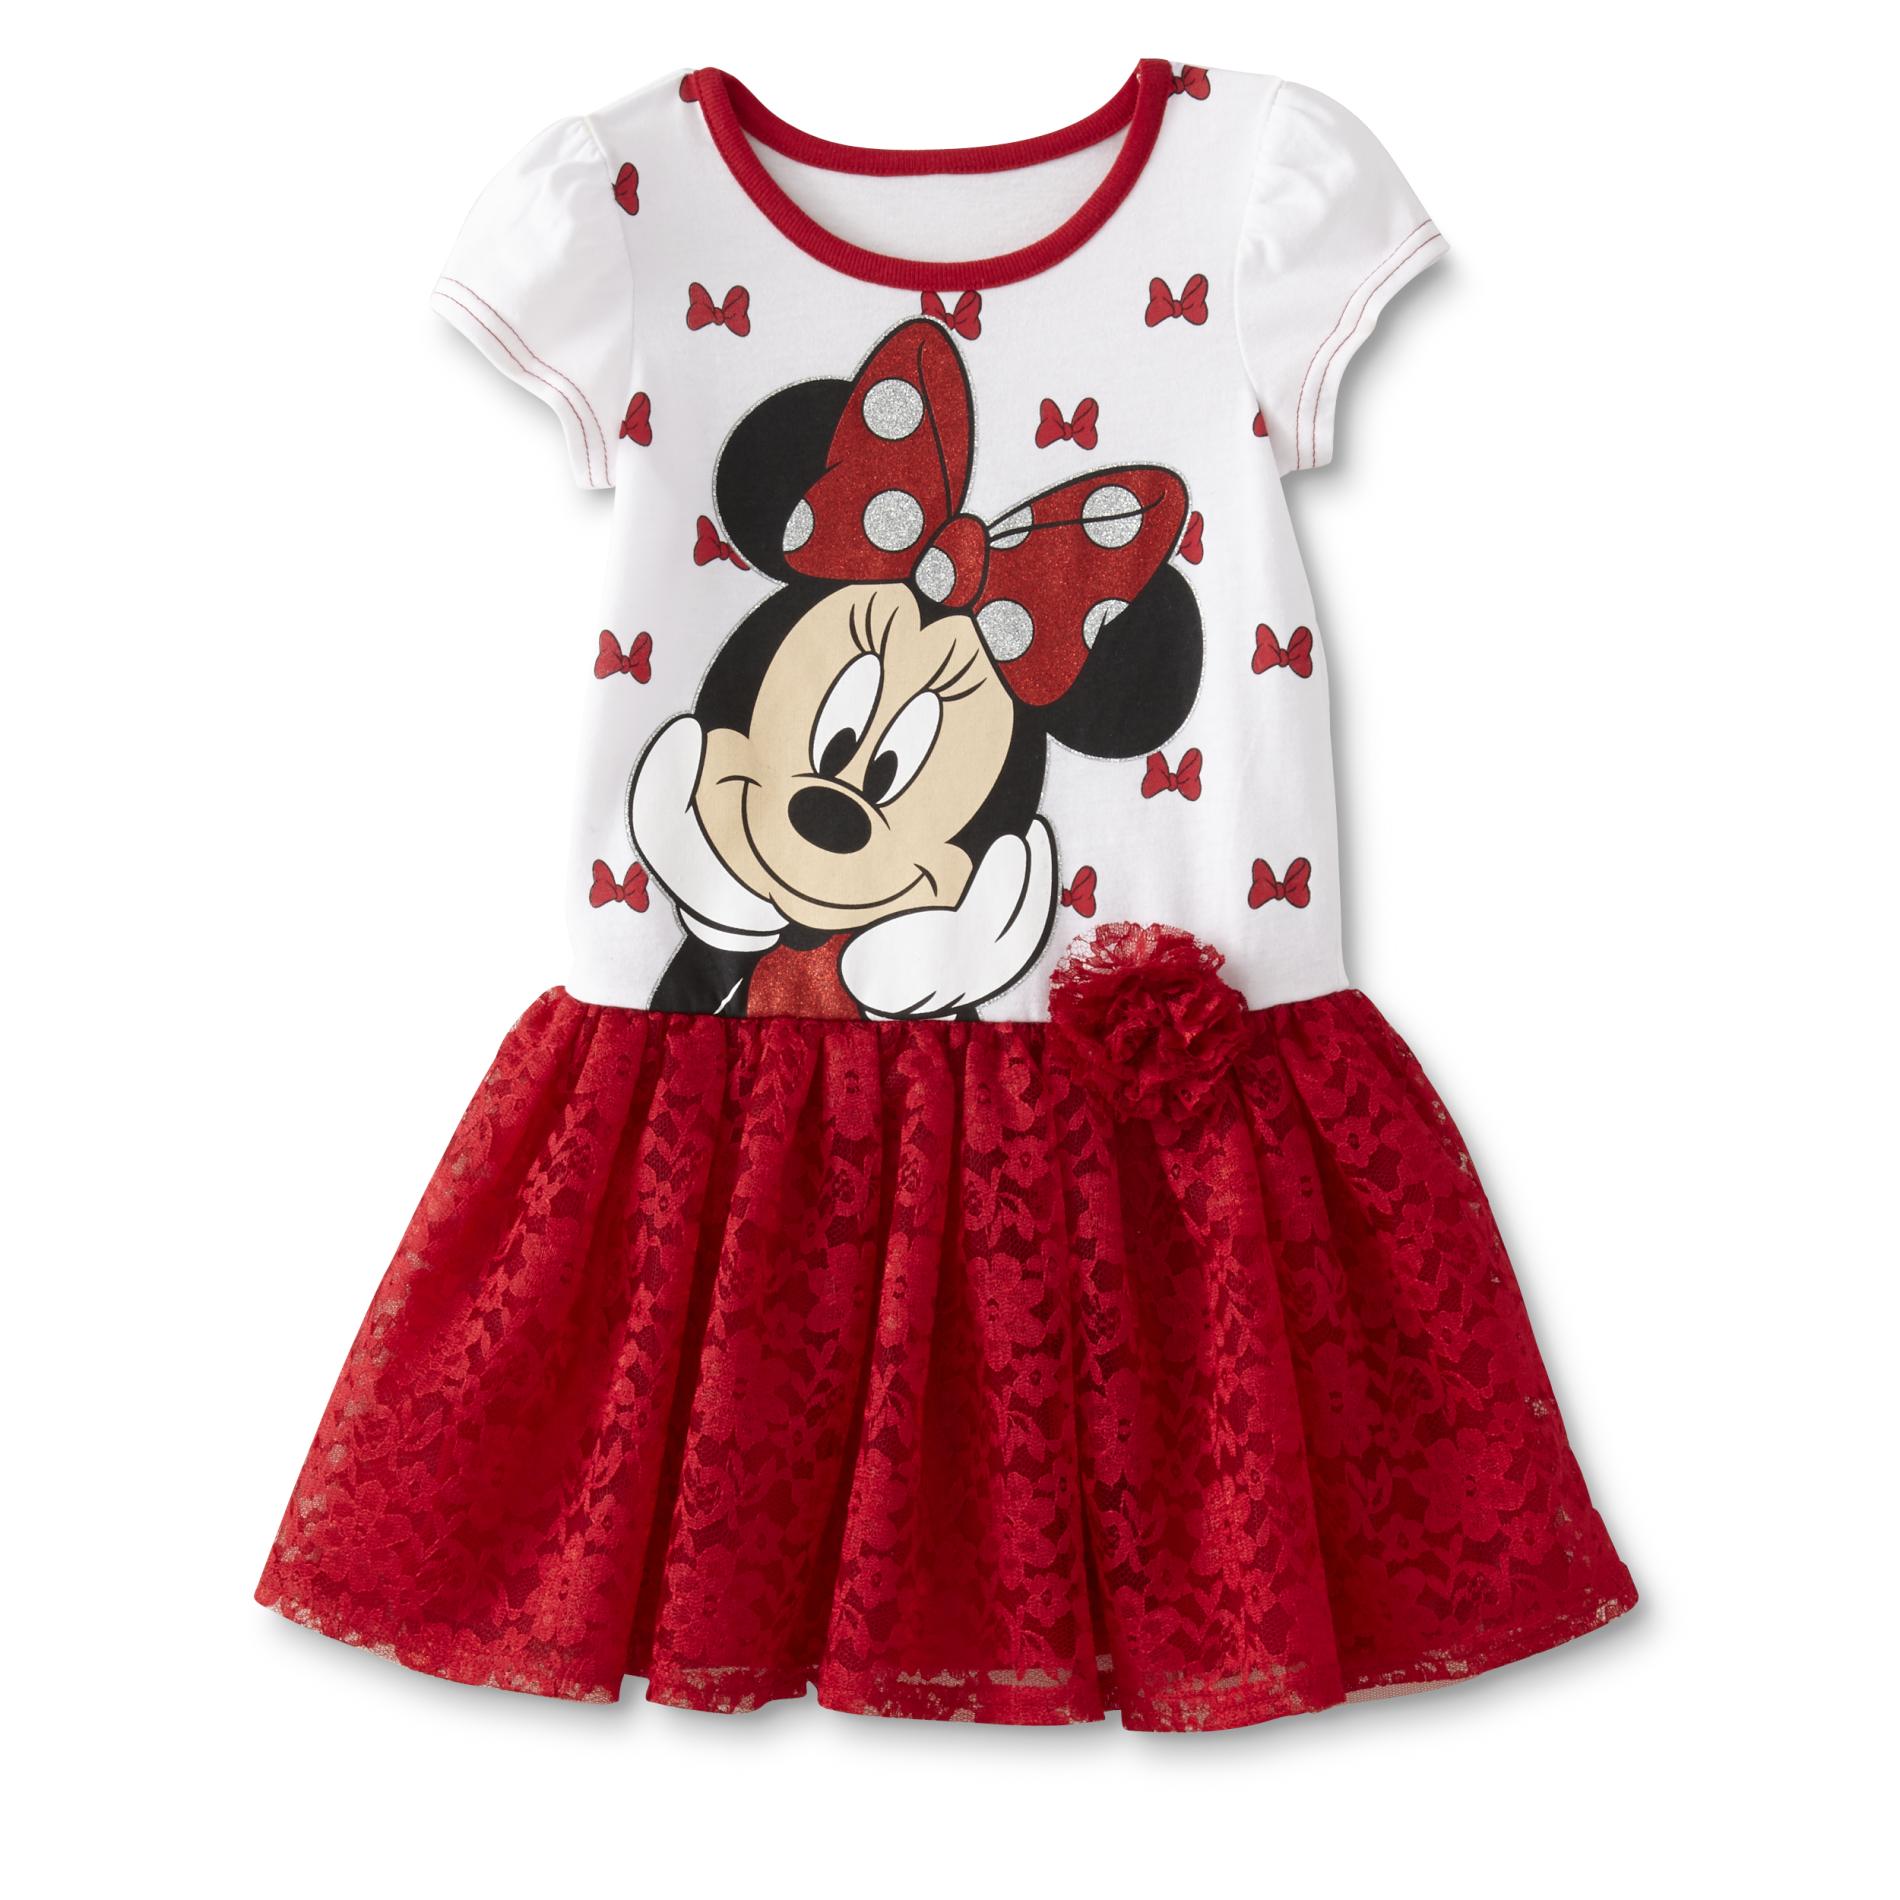 Disney Minnie Mouse Infant & Toddler Girl's Tutu Dress